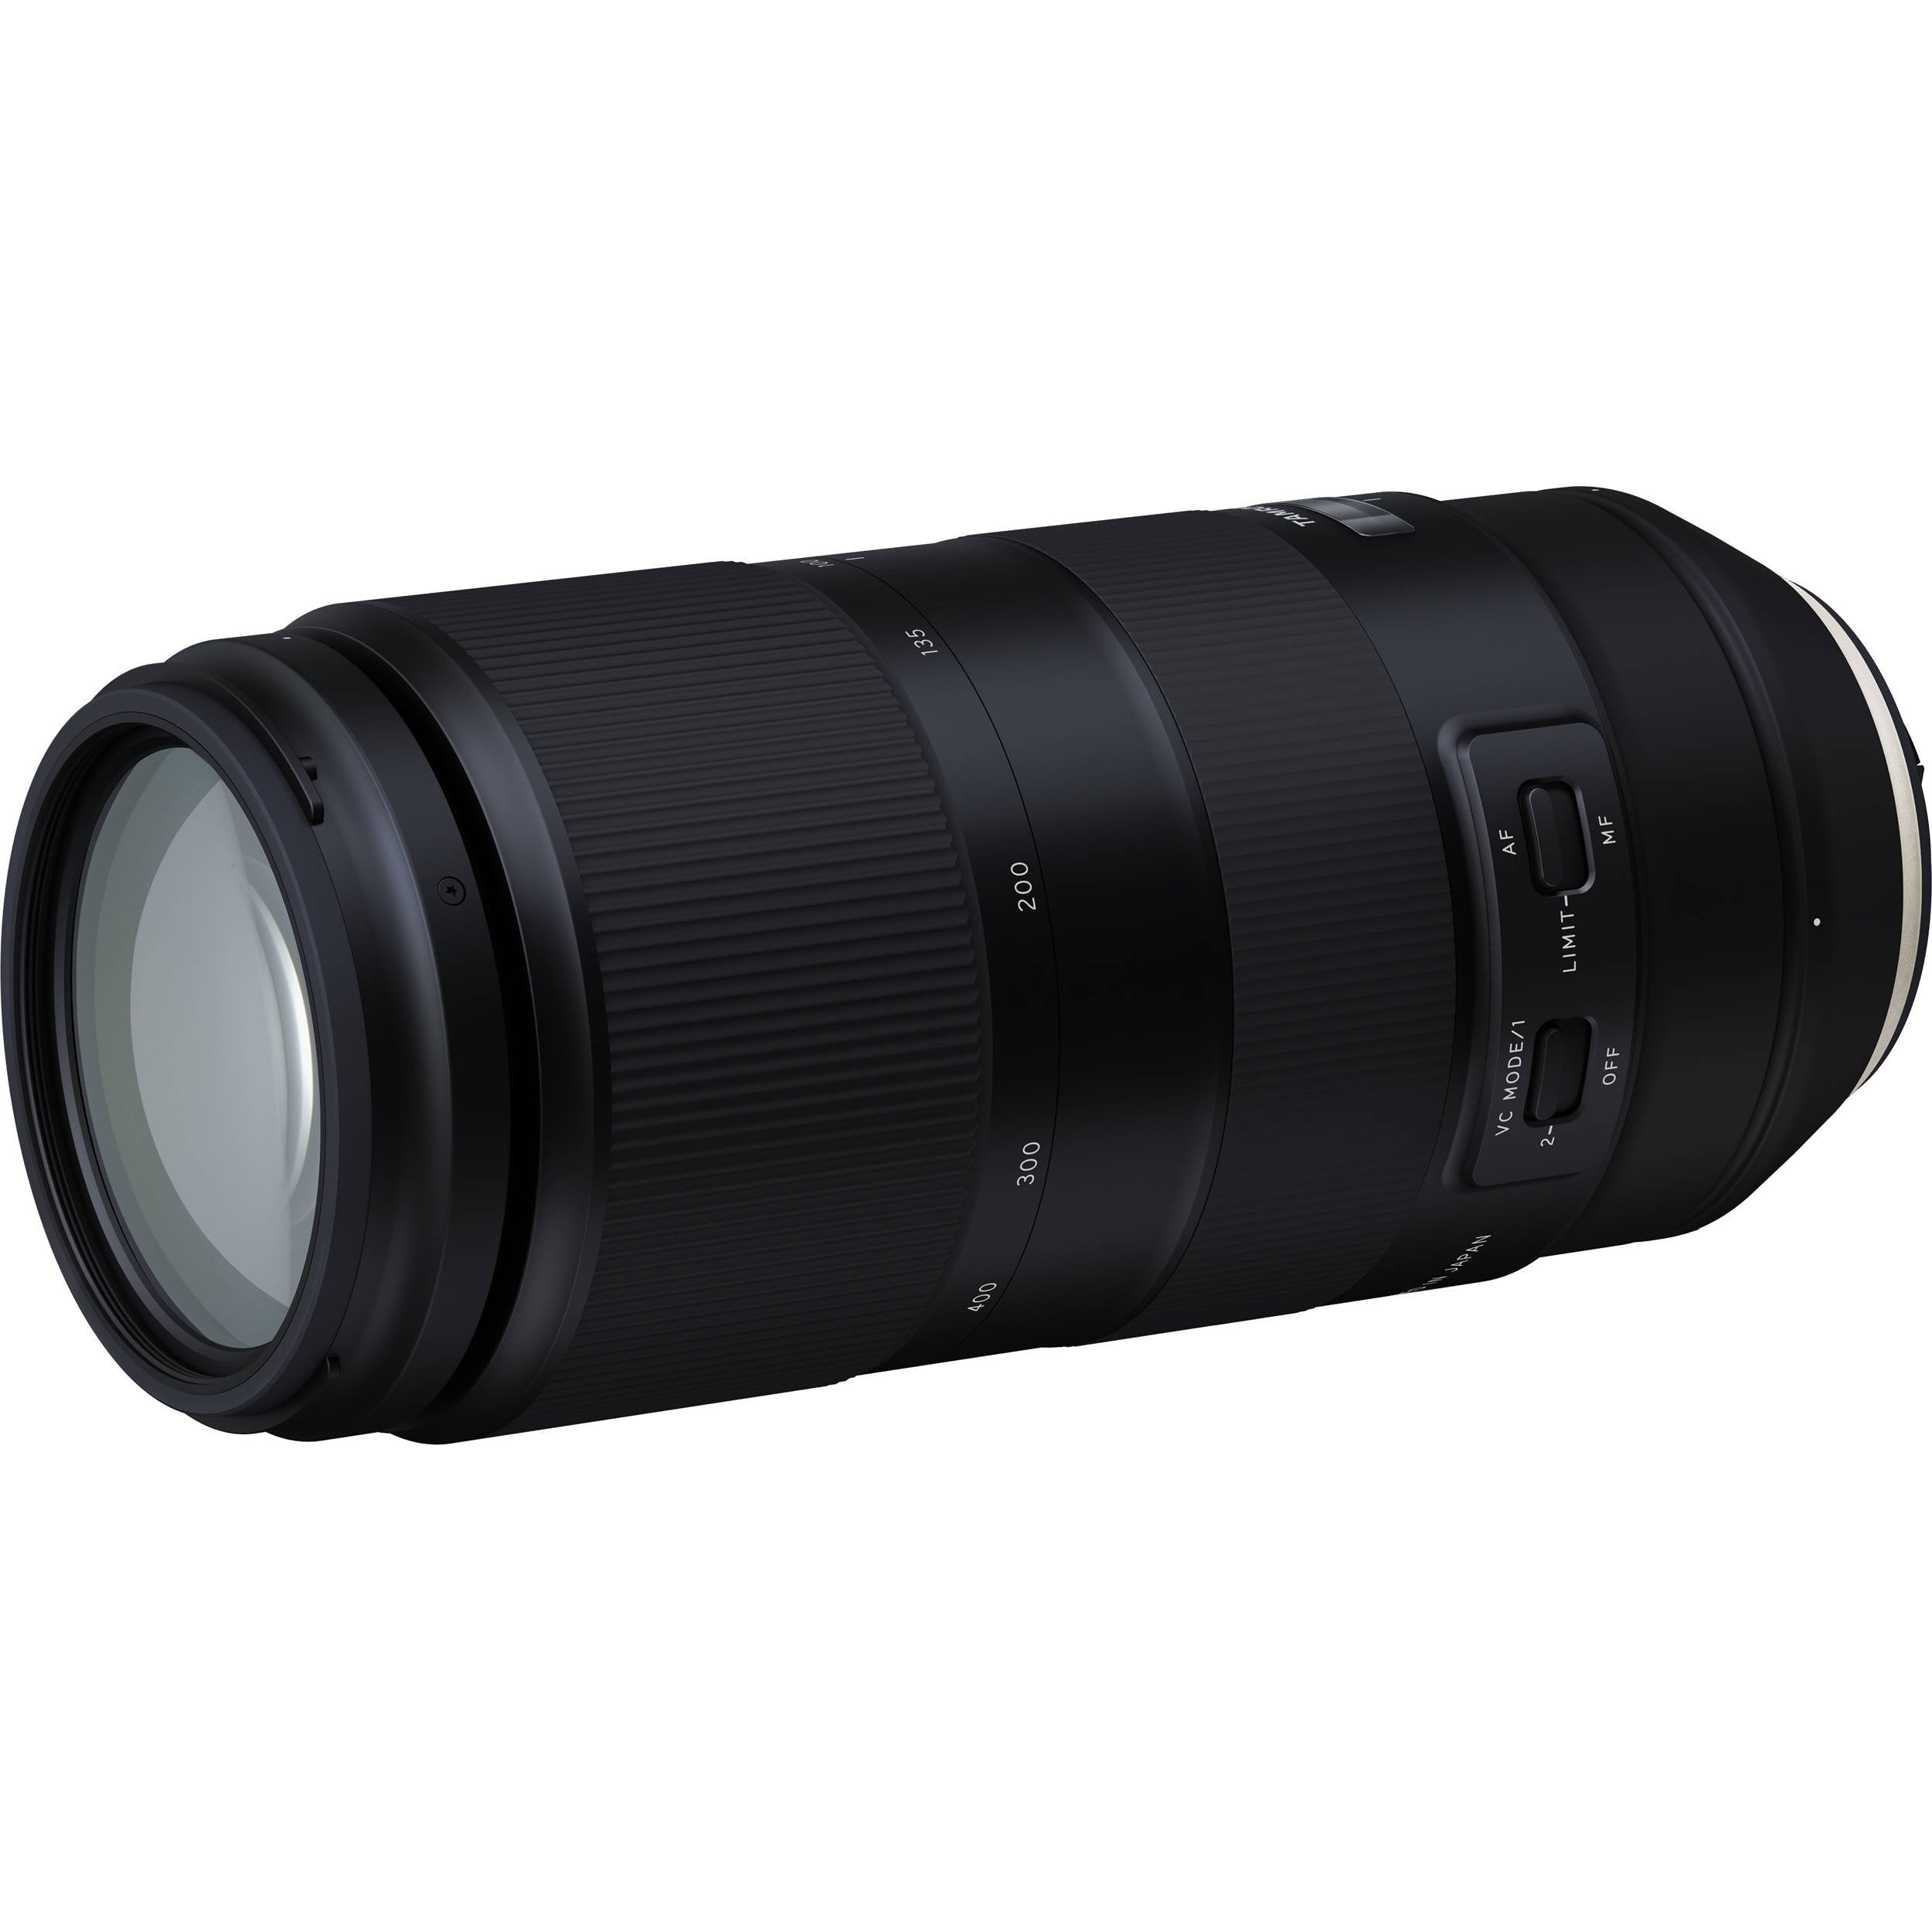 Tamron 100-400mm f/4.5-6.3 Di VC USD Lens for Nikon F AFA035N-700 (International Model) + 67mm UV Filter + Lens Cap Keep